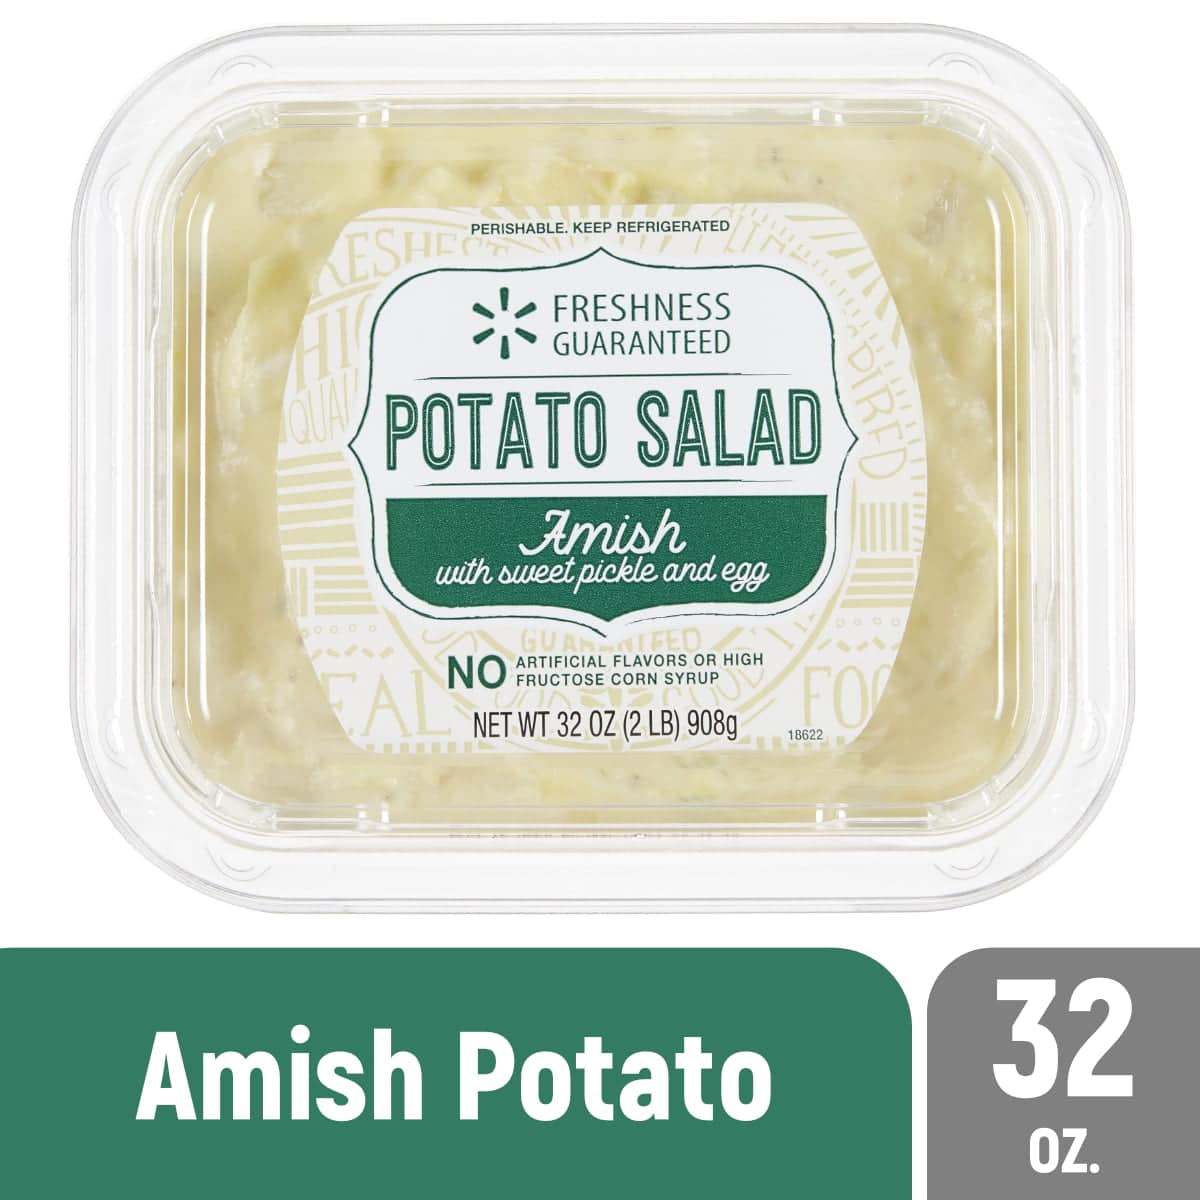 Freshness Guaranteed Amish Potato Salad, 32 oz